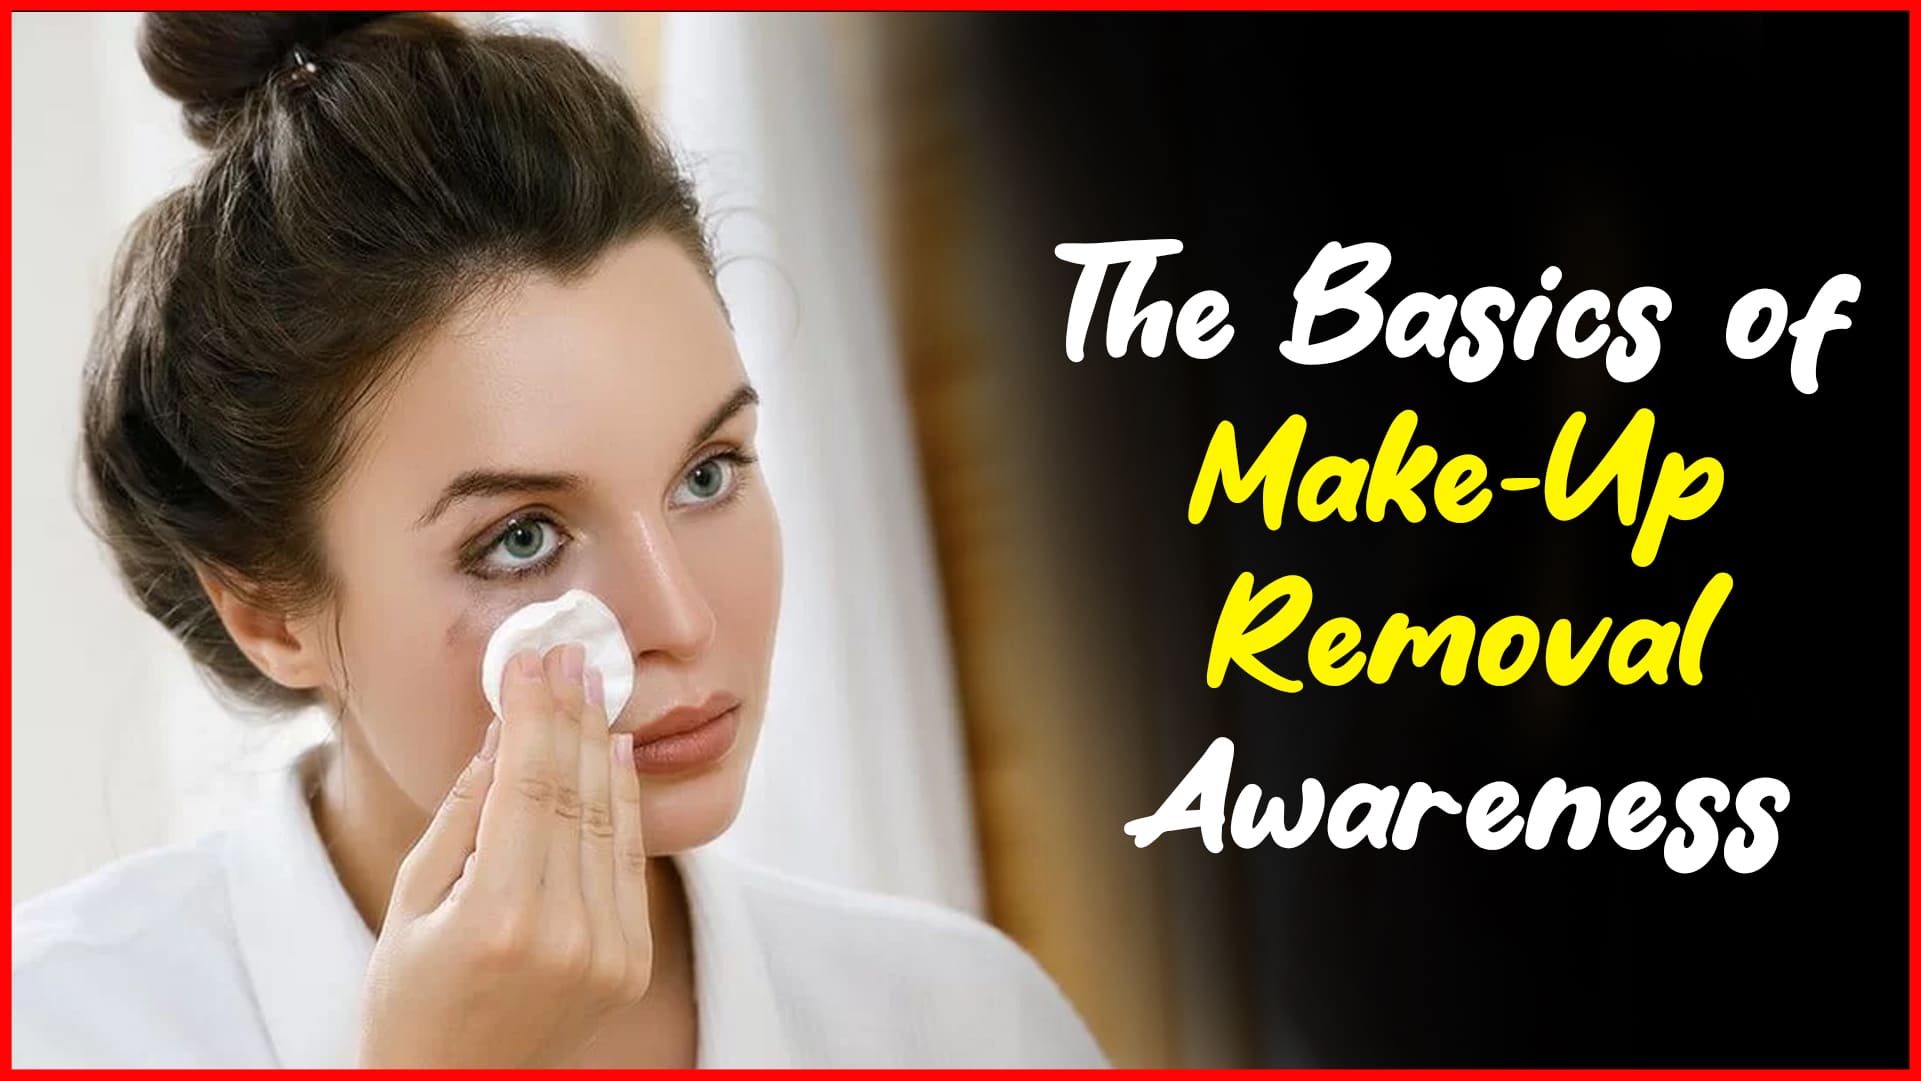 Blog: The basics of make-up removal awareness